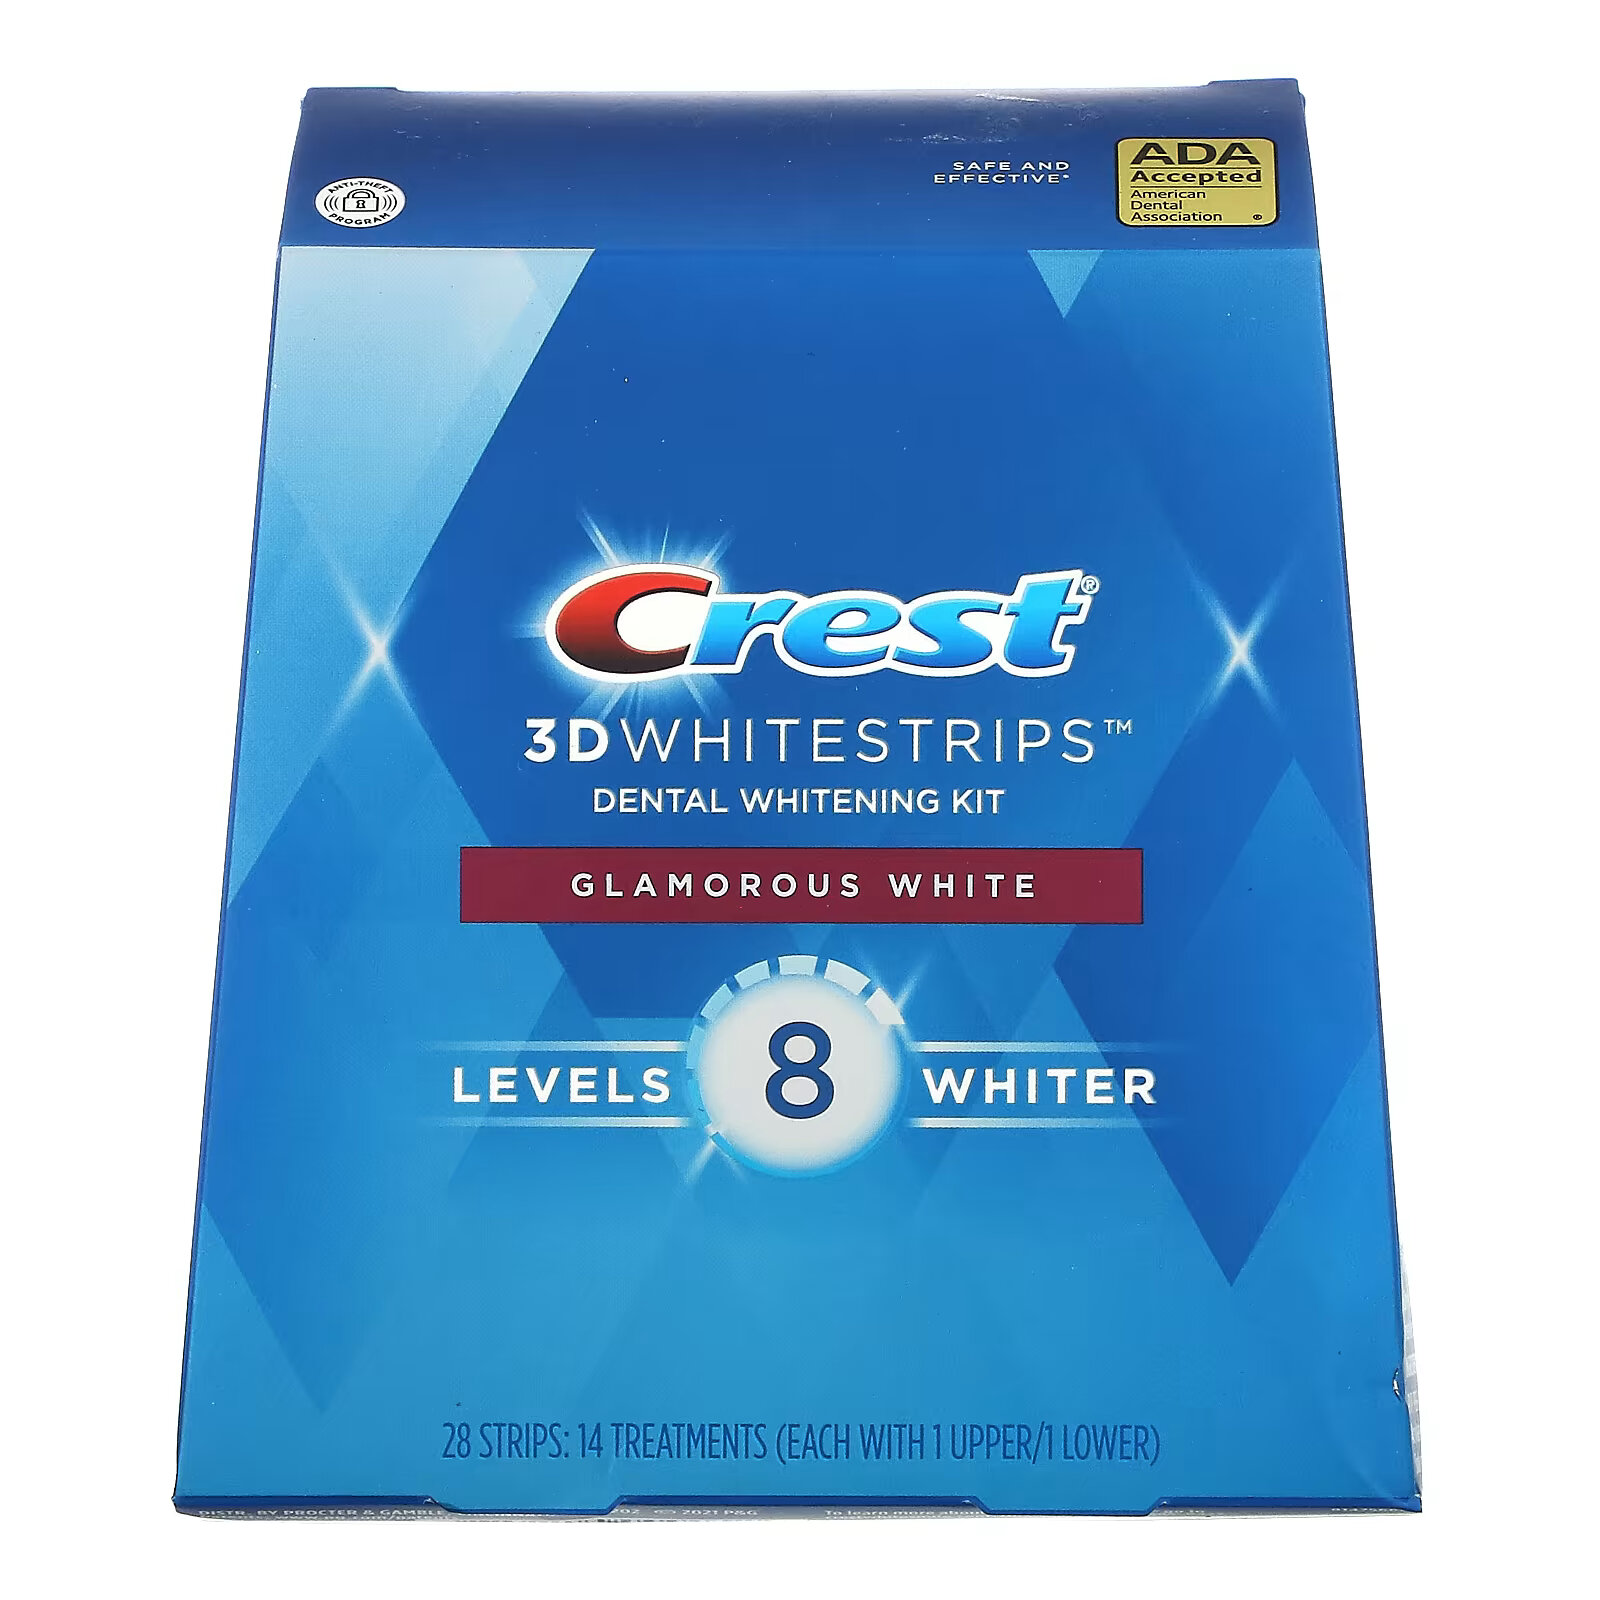 Crest, 3D Whitestrips, Glamorous White, комплект для отбеливания зубов, 28 полосок набор для отбеливания зубов crest 3d whitestrips sensitive 36 полосок